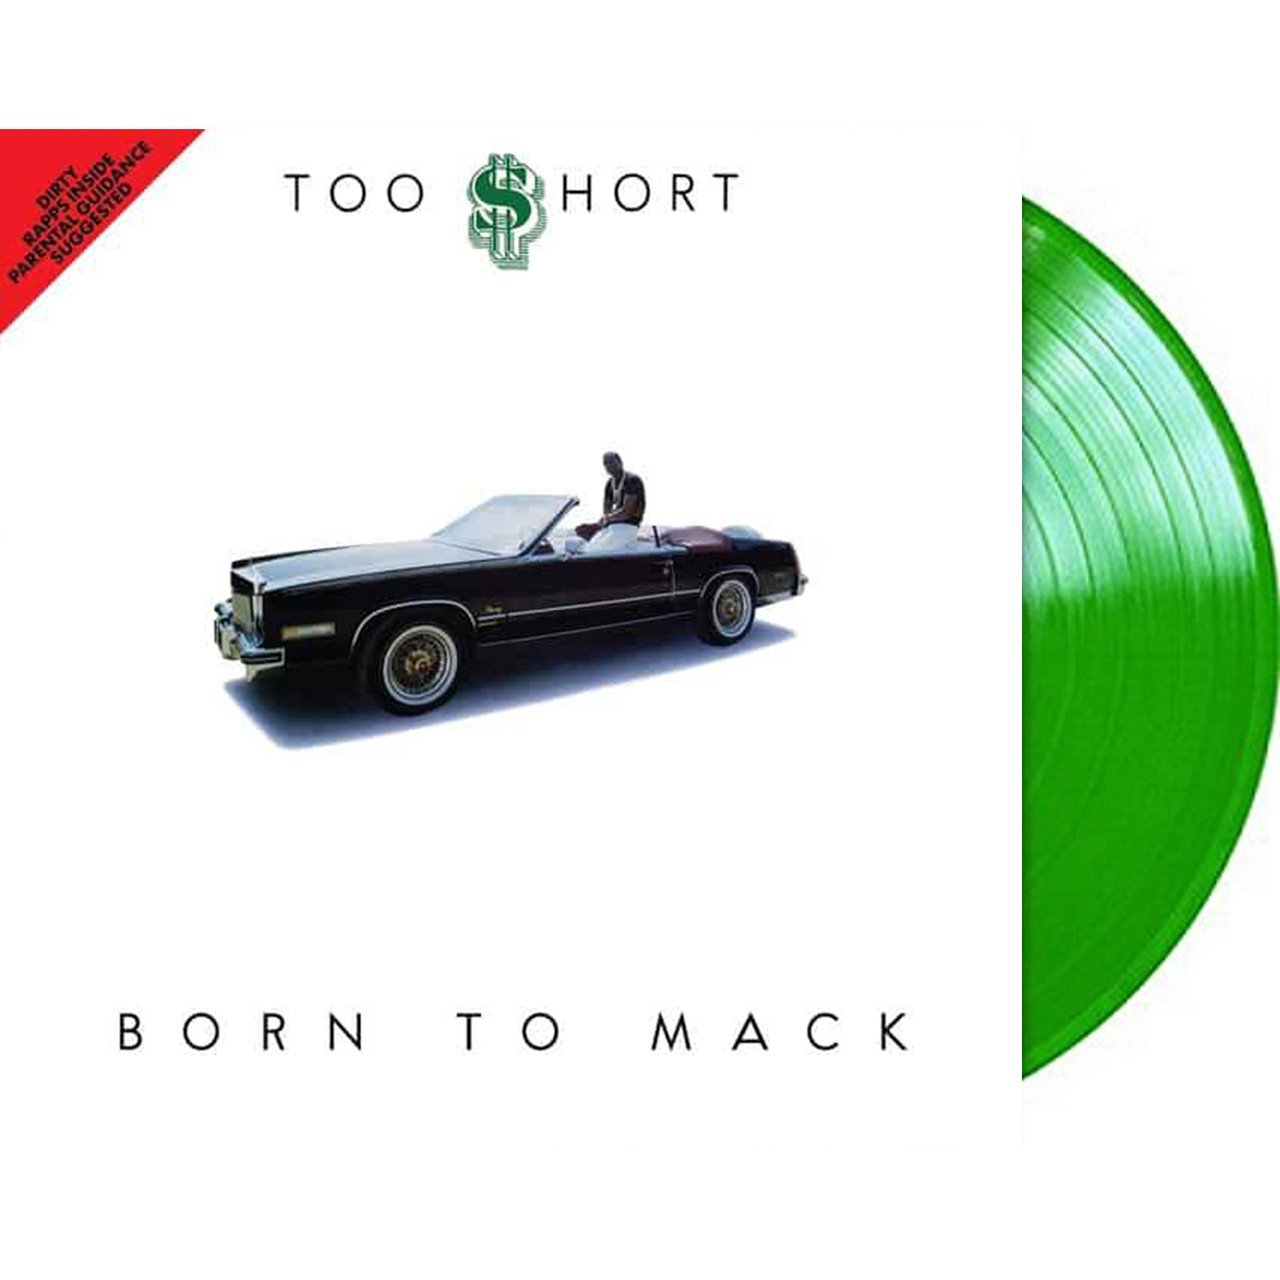 Too Short "Born to Mack" [30th Anniversary, Green Vinyl]